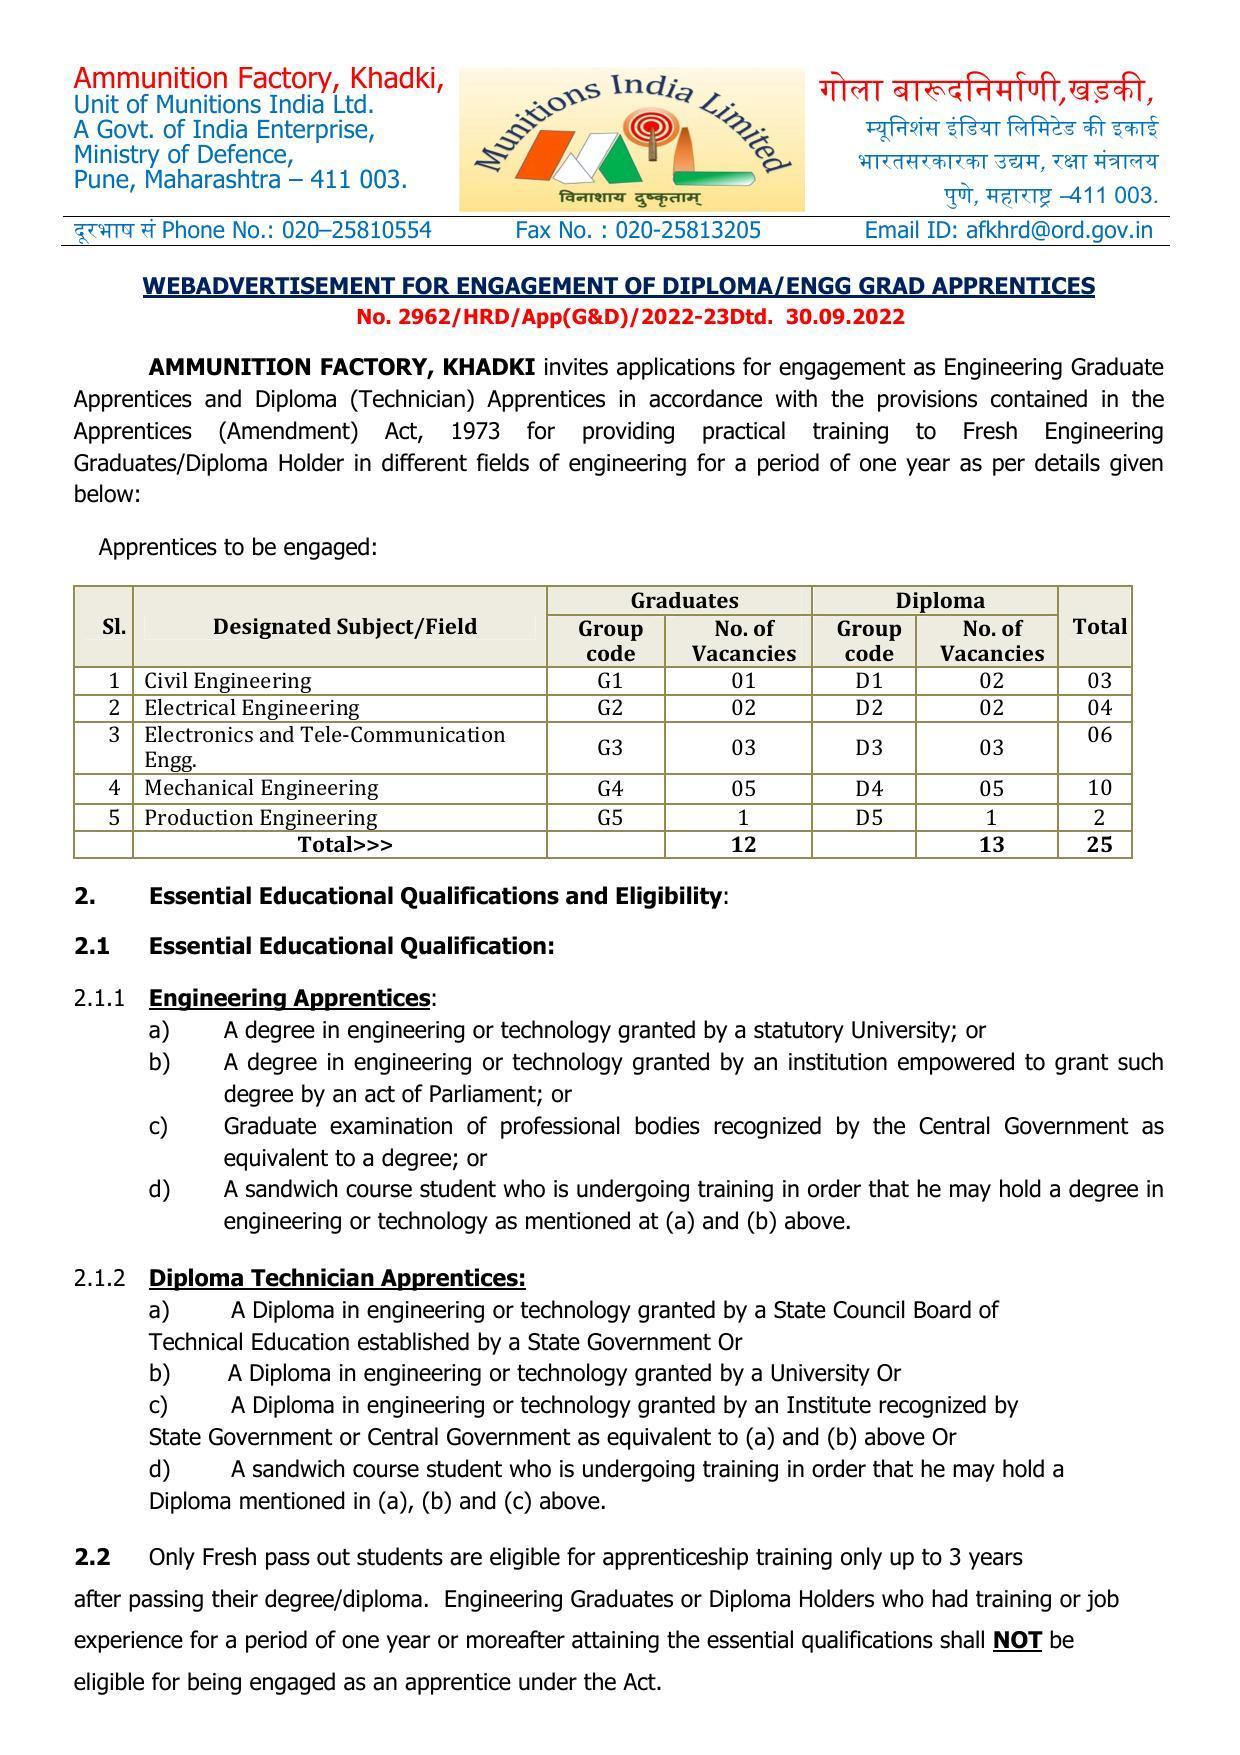 Ammunition Factory Khadki Invites Application for 25 Apprentice Recruitment 2022 - Page 3